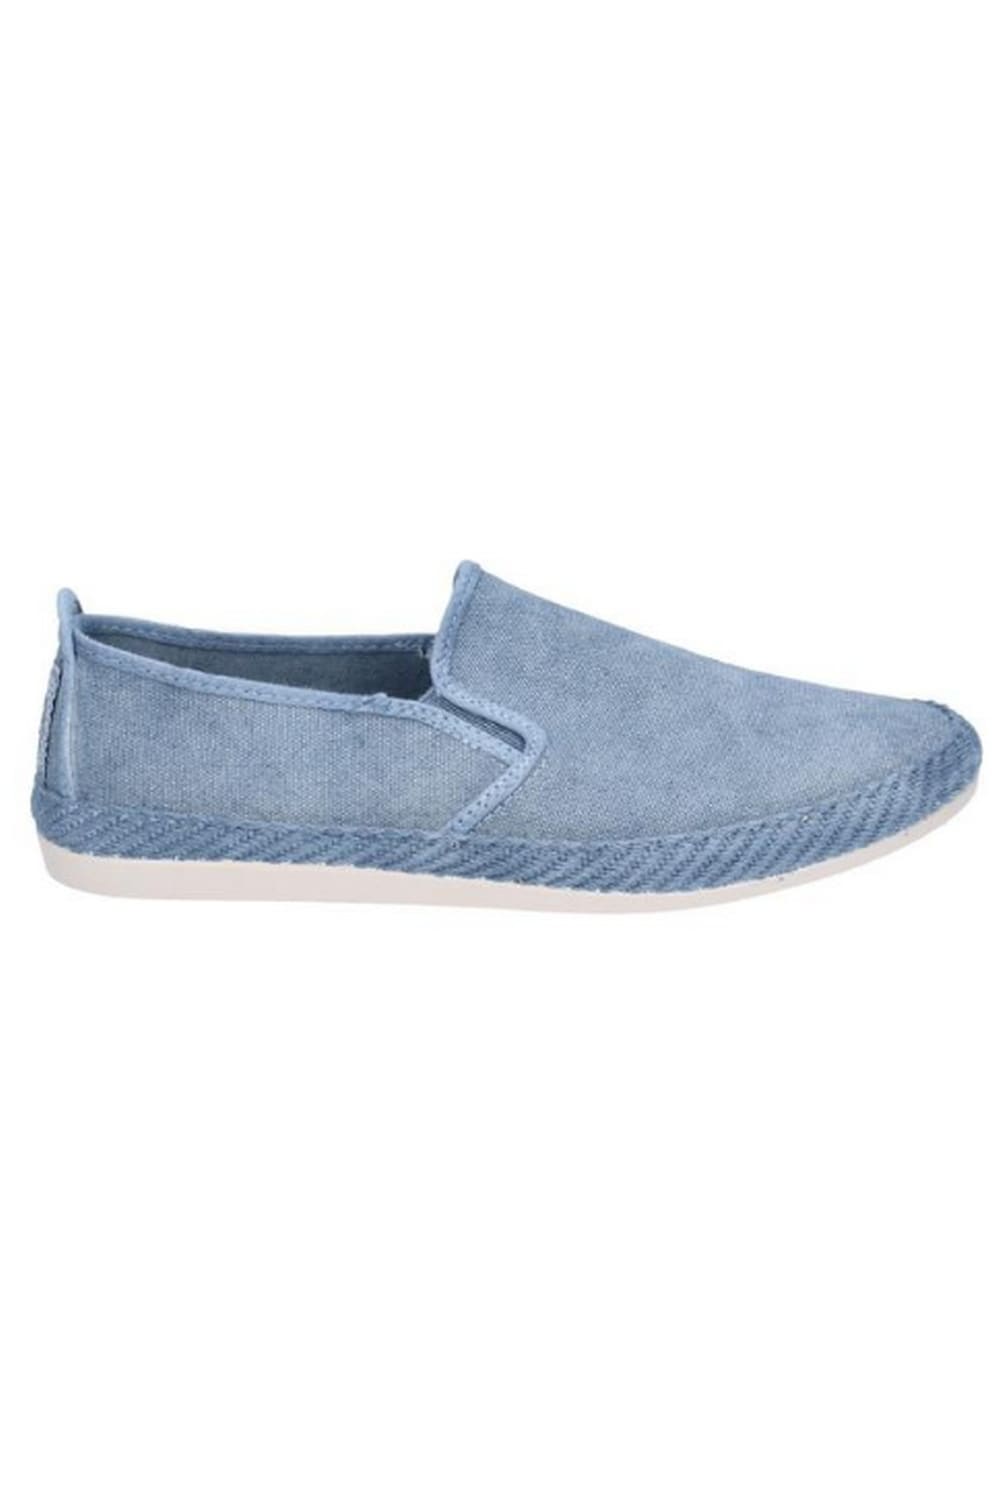 Manso Slip On Shoe - Light Blue